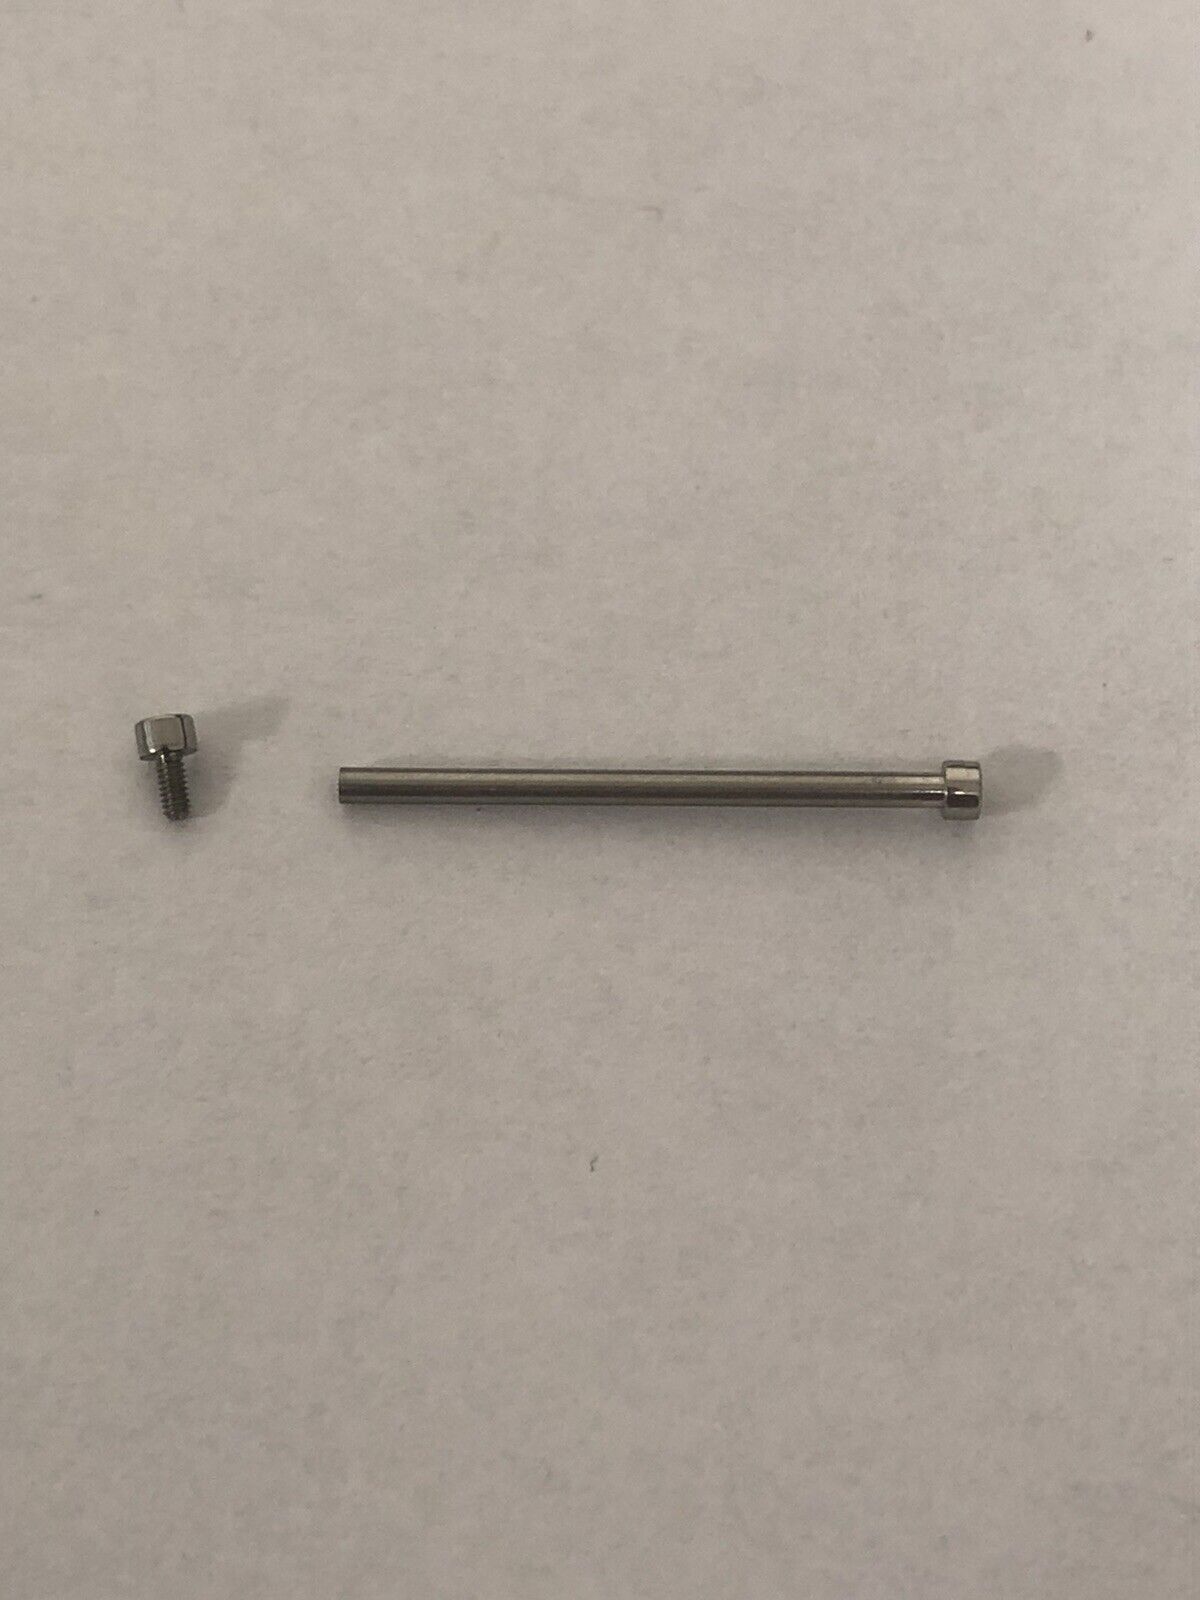 Festina F16543 Pin Pen Screw Case Endlink Link Bracelet NEW Original Watch Part